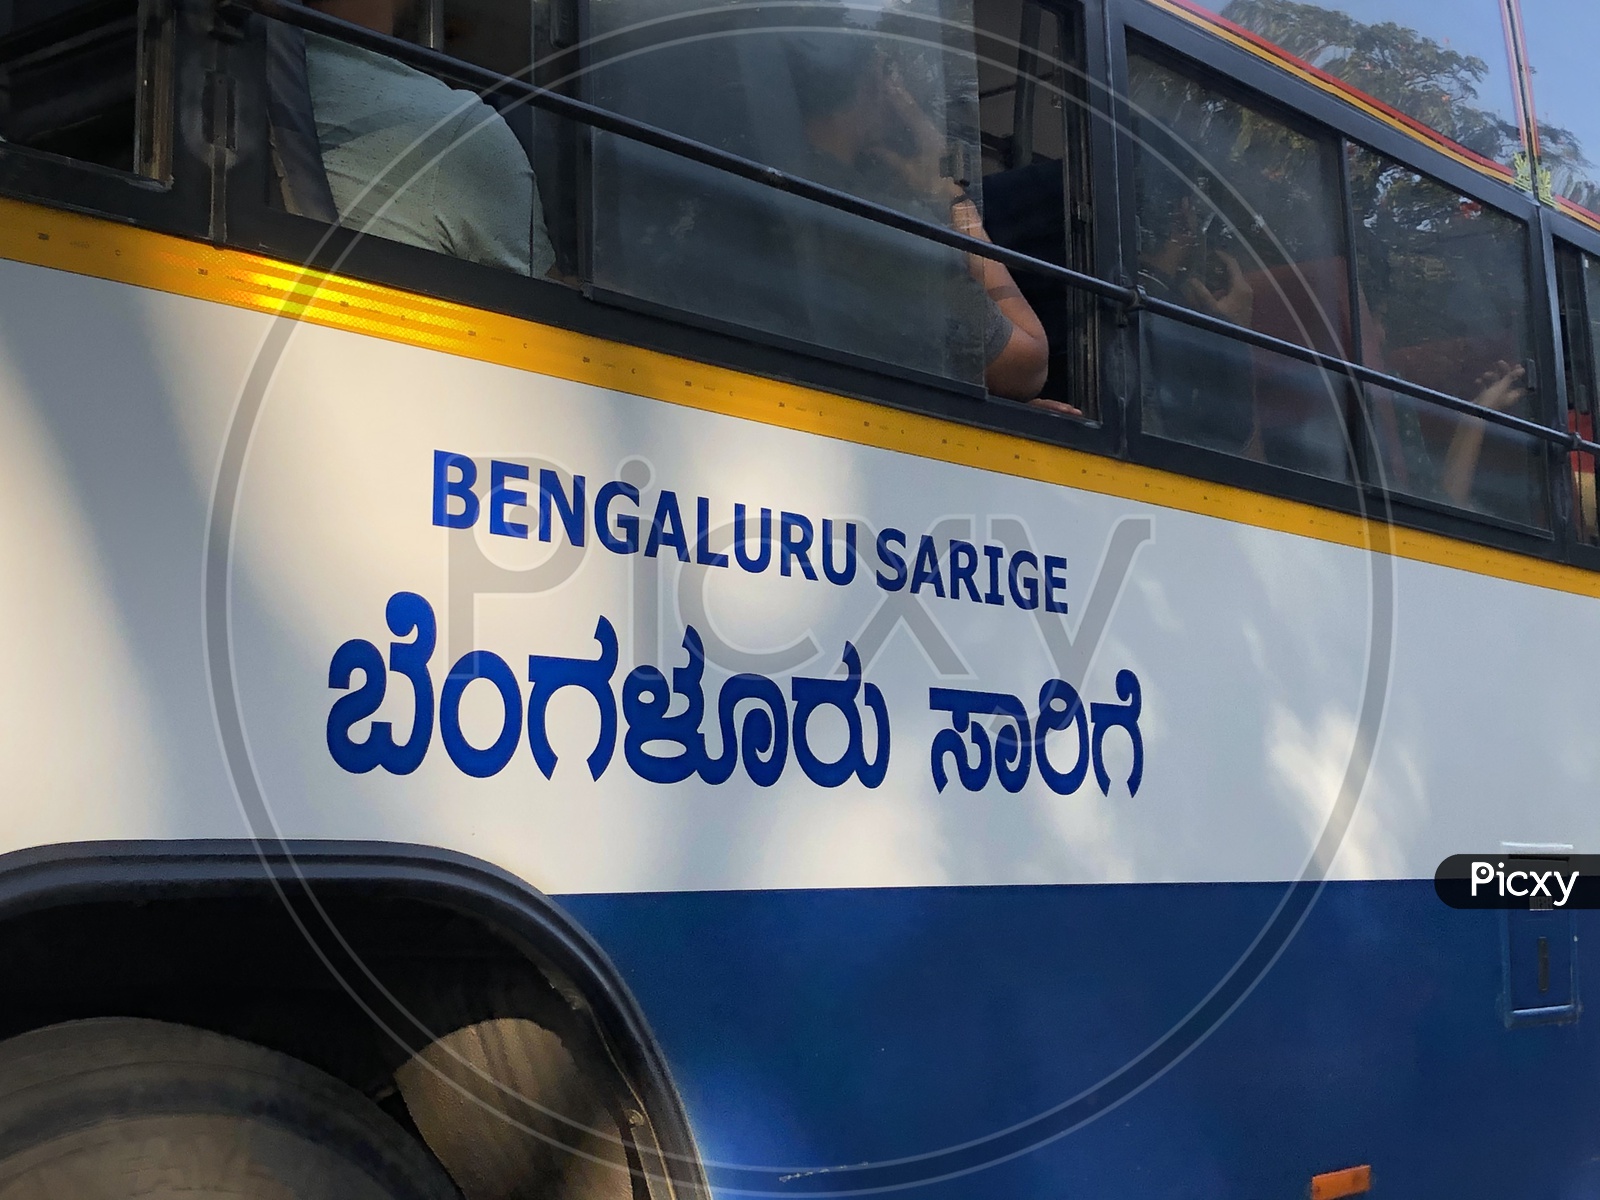 Bengaluru Sarige bus